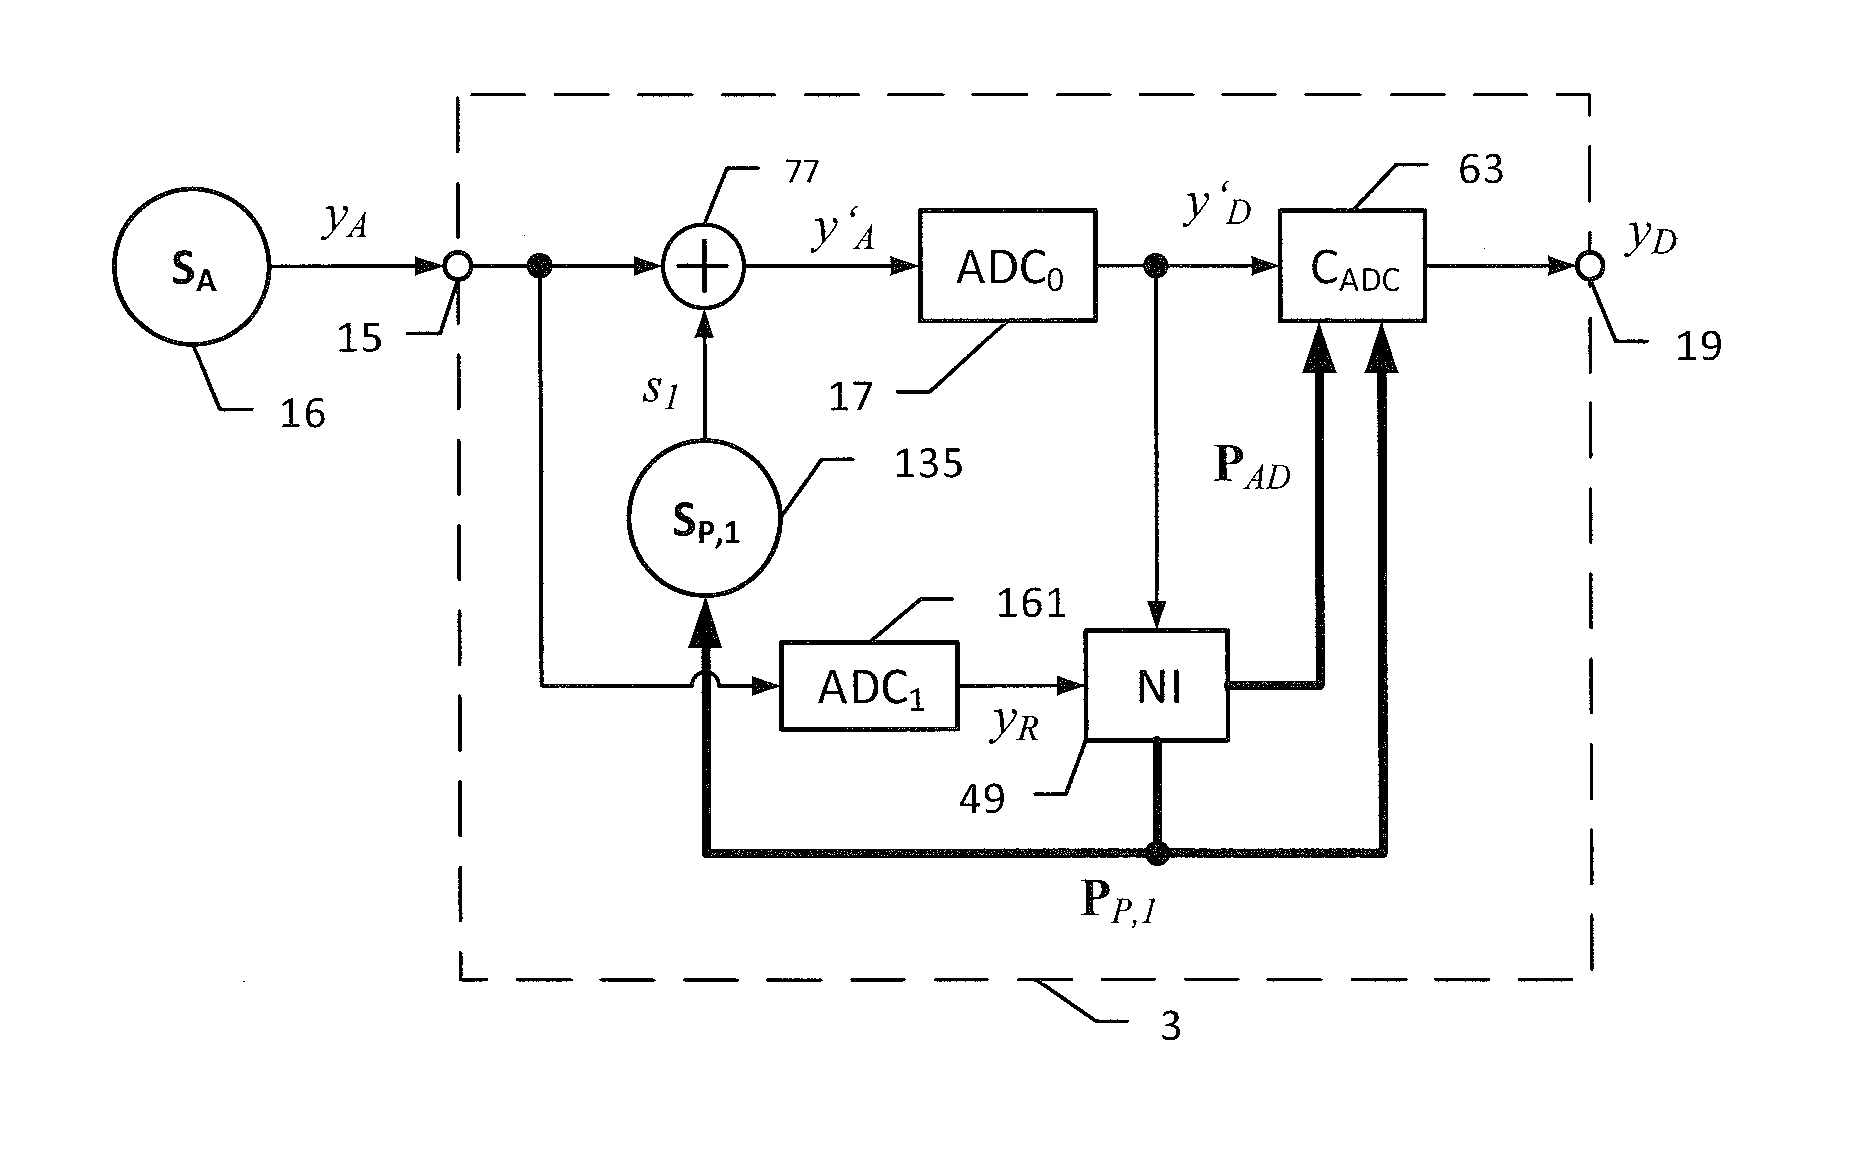 Converter arrangement and method for converting an analogue input signal into a digital output signal